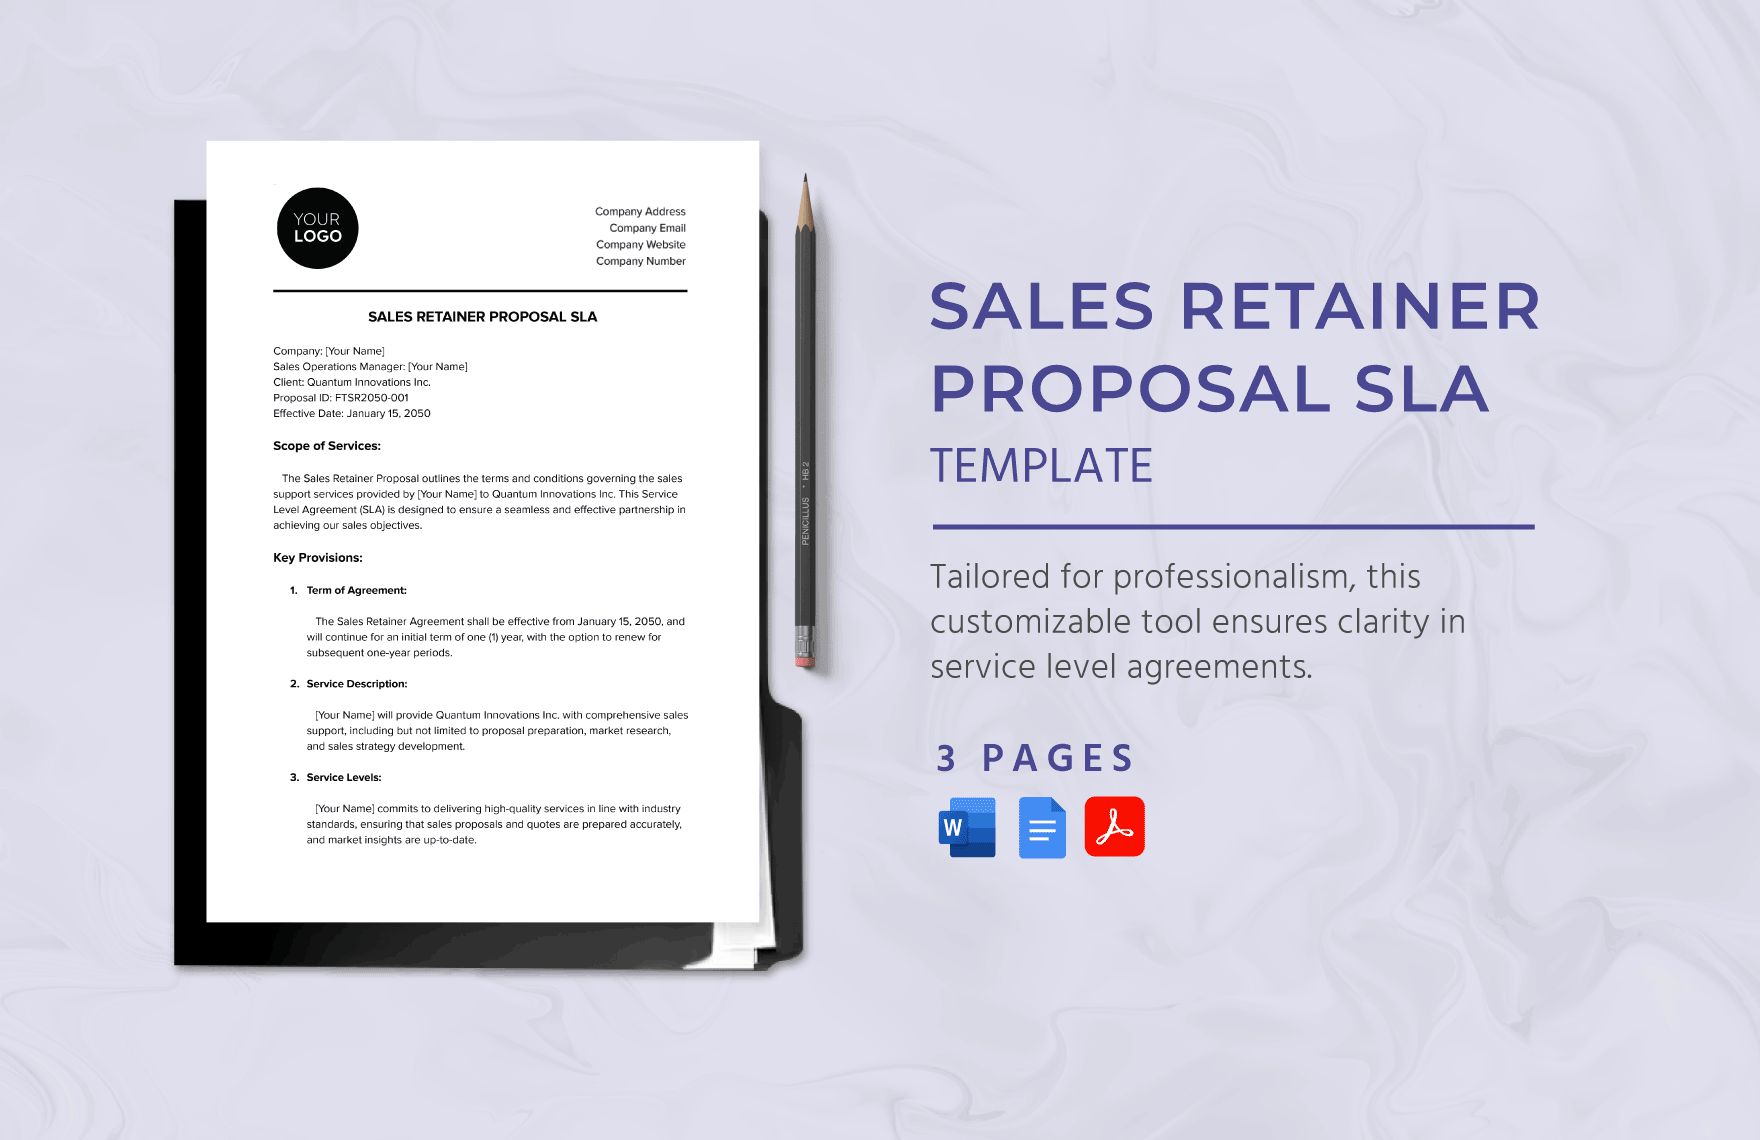 Sales Retainer Proposal SLA Template